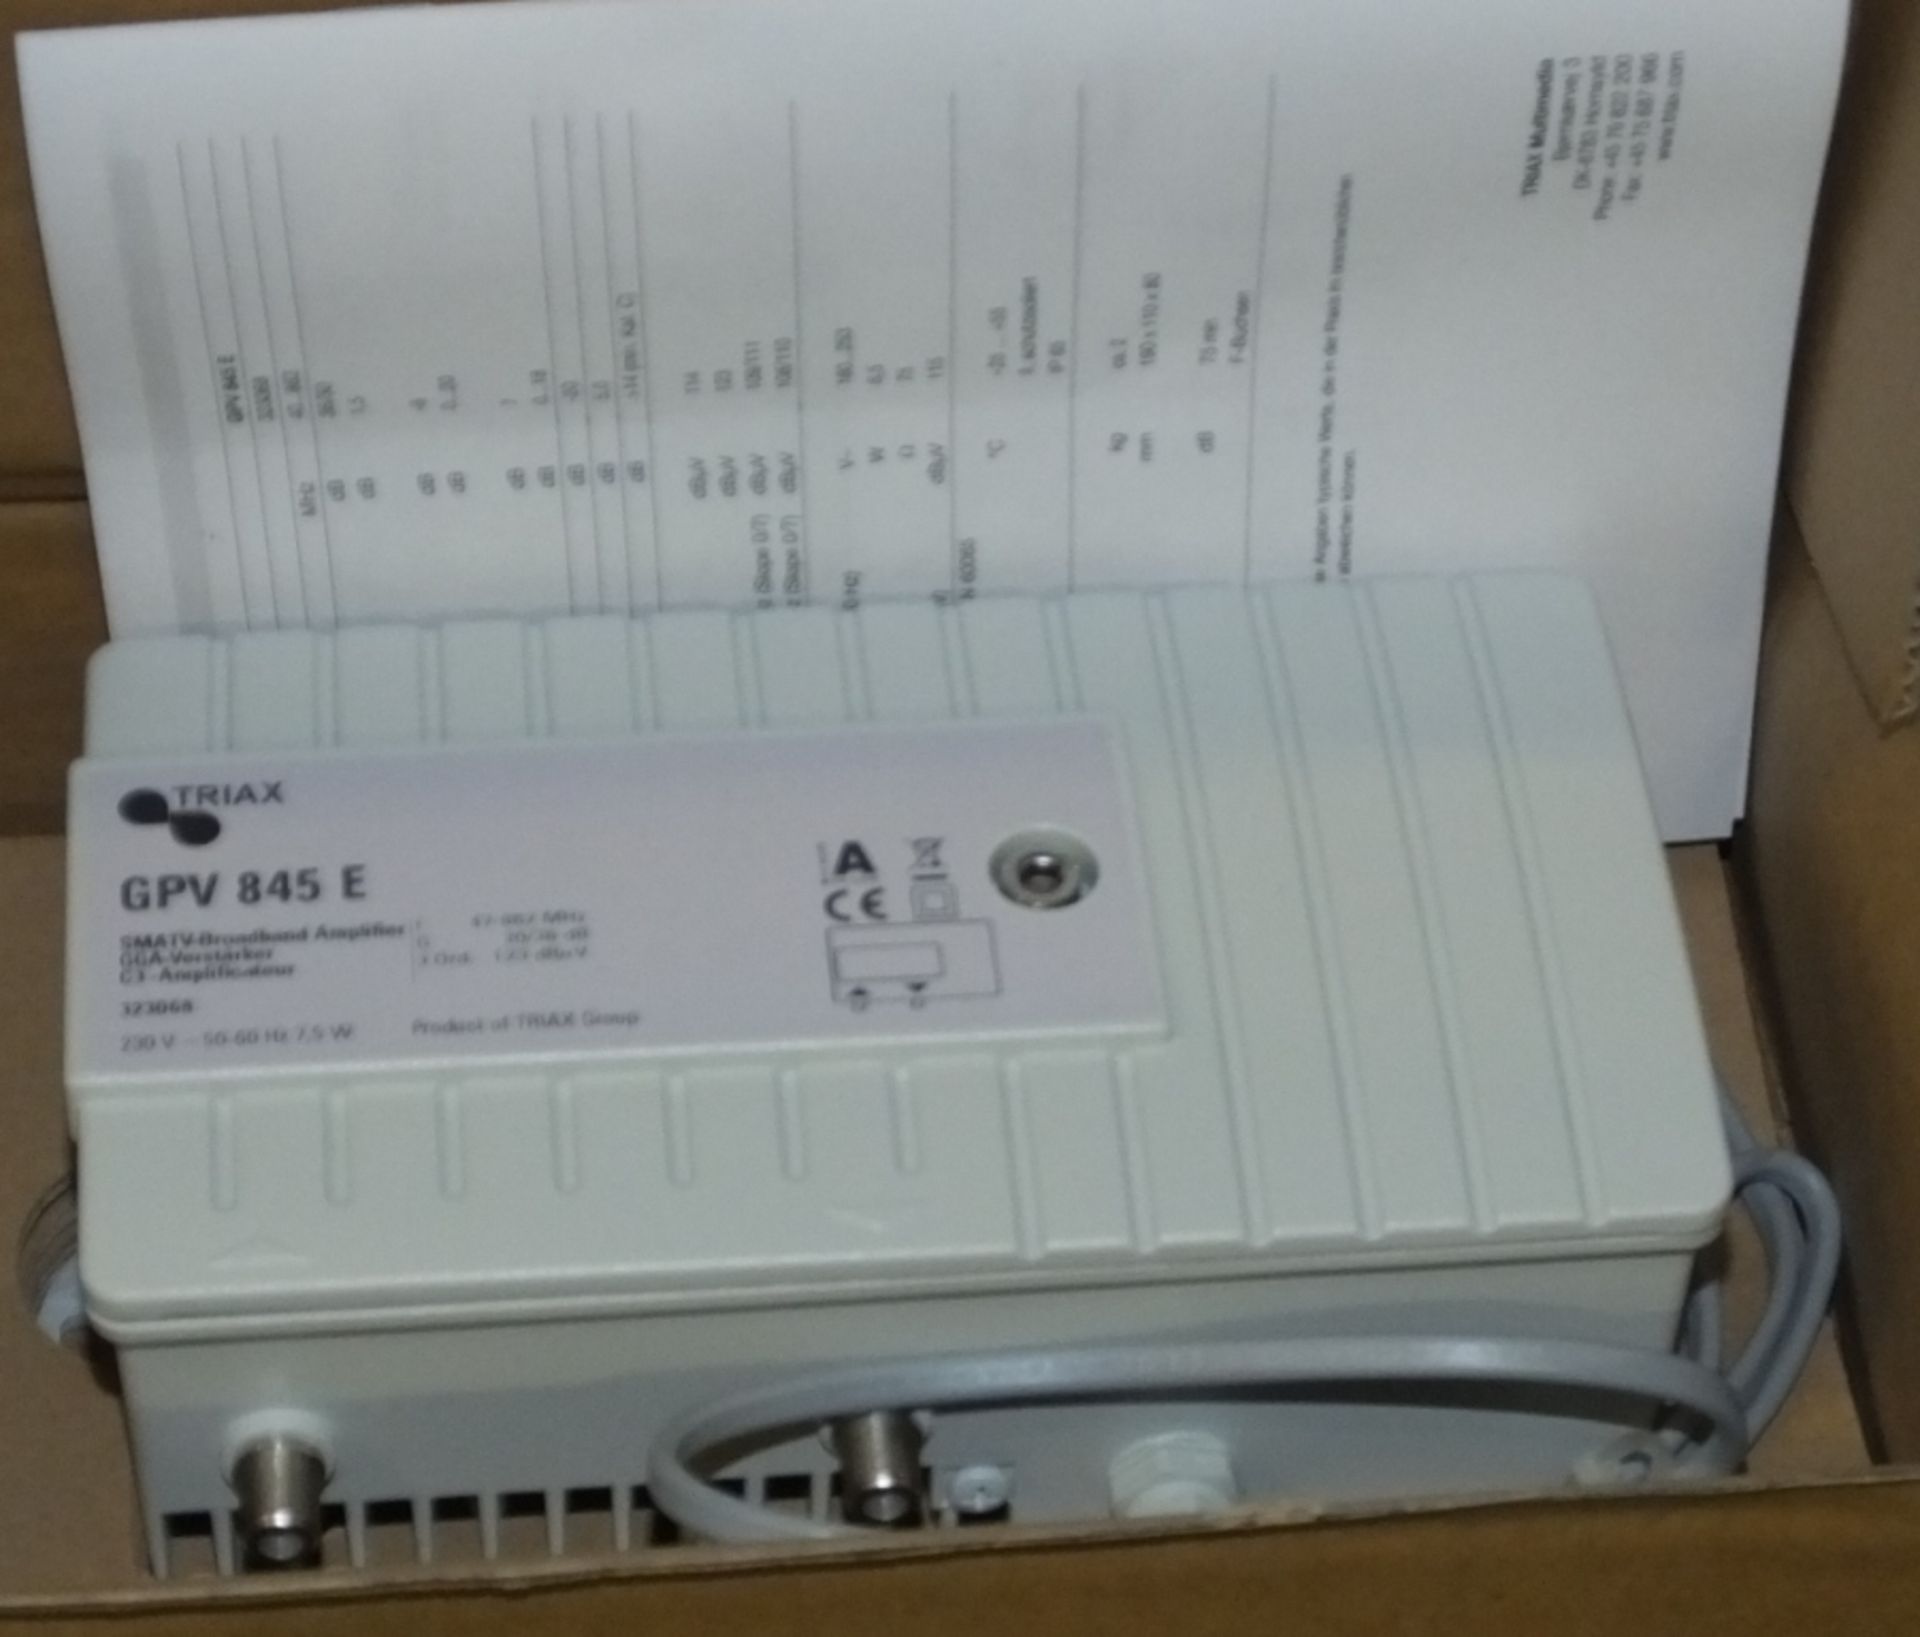 6x Triax GPV 845E Broadband Amplifiers - Image 2 of 2